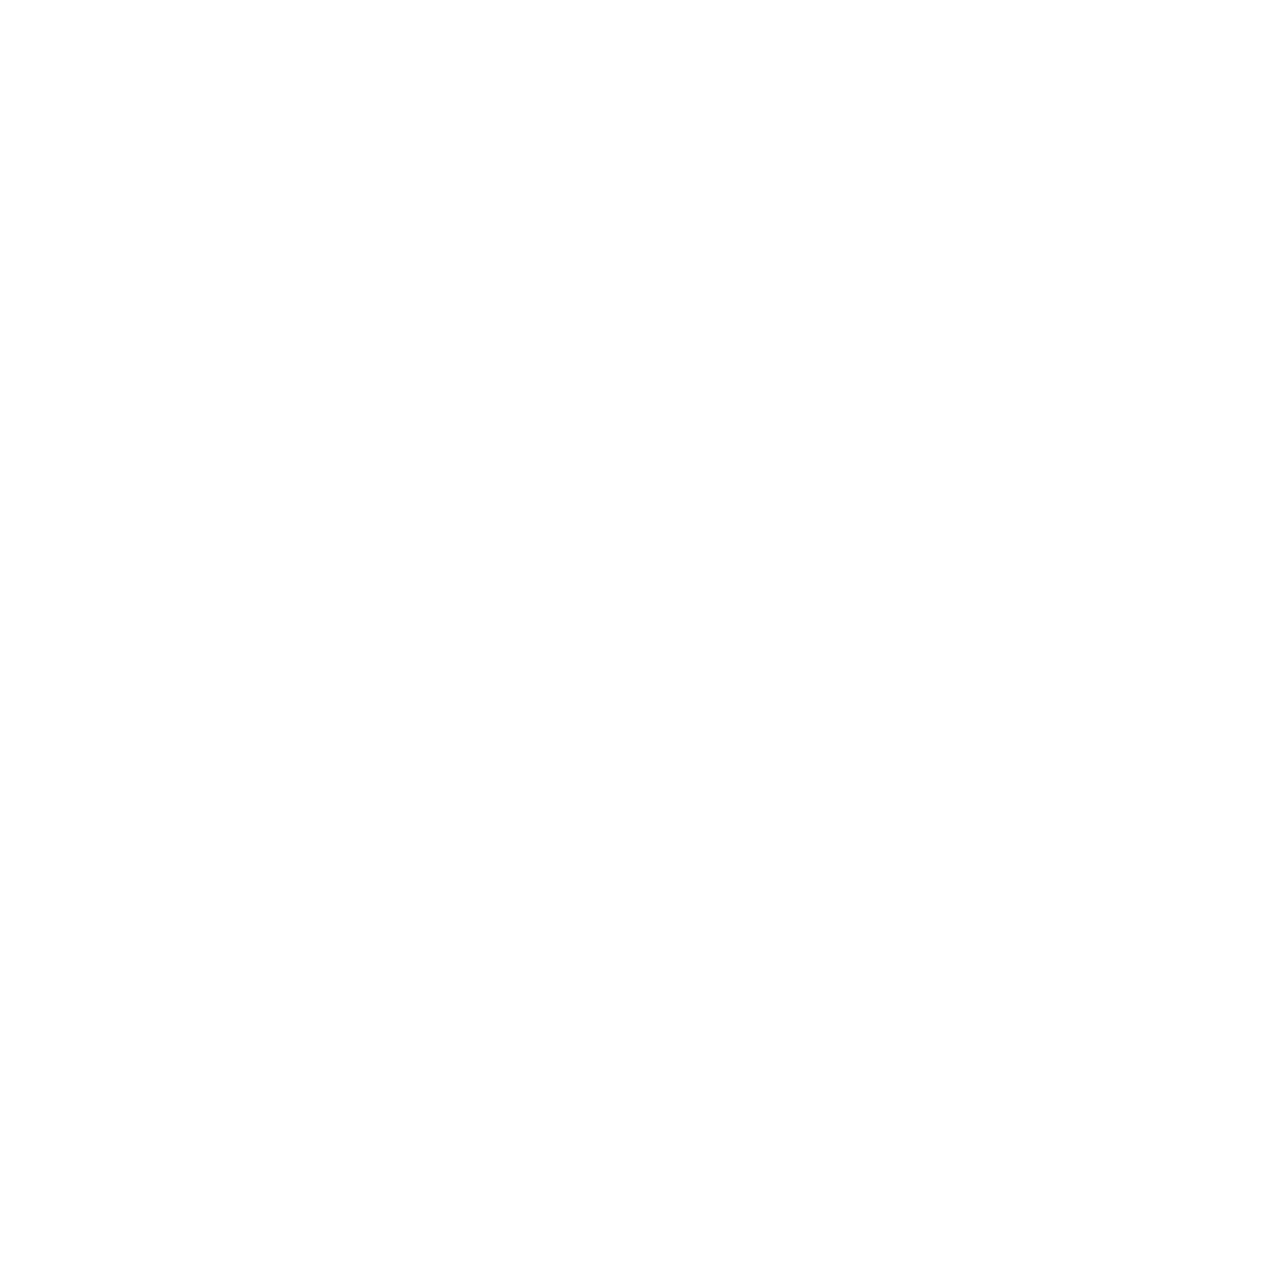 Reece Nichols Lee's Summit - JSC Engineers